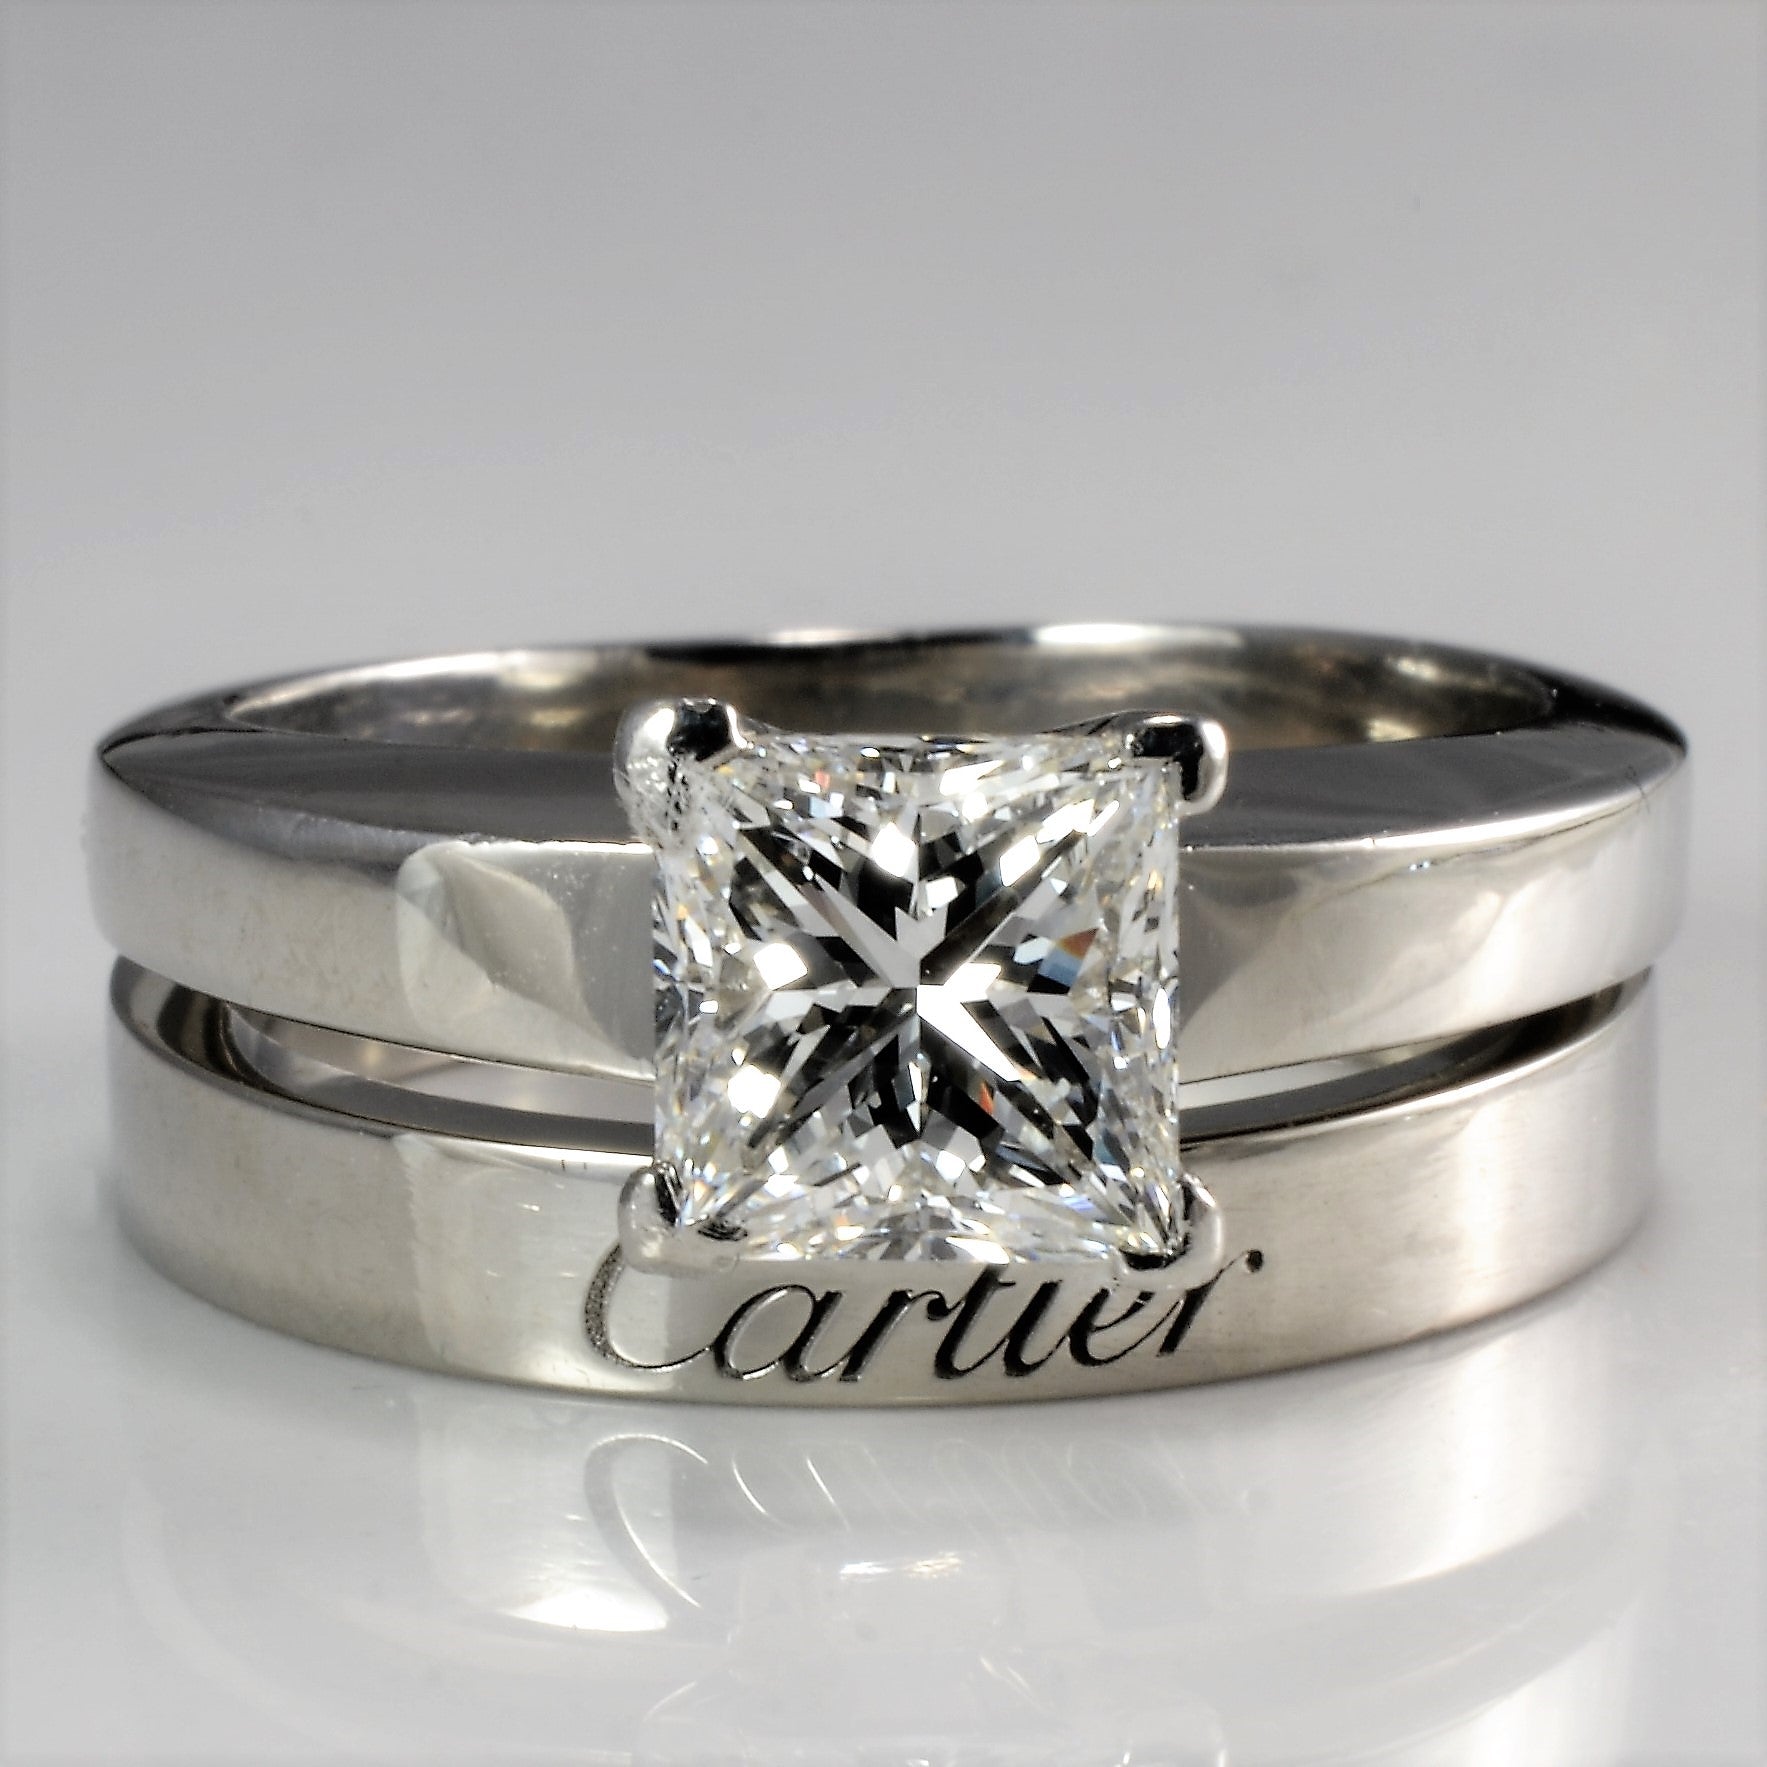 3 carat cartier diamond ring